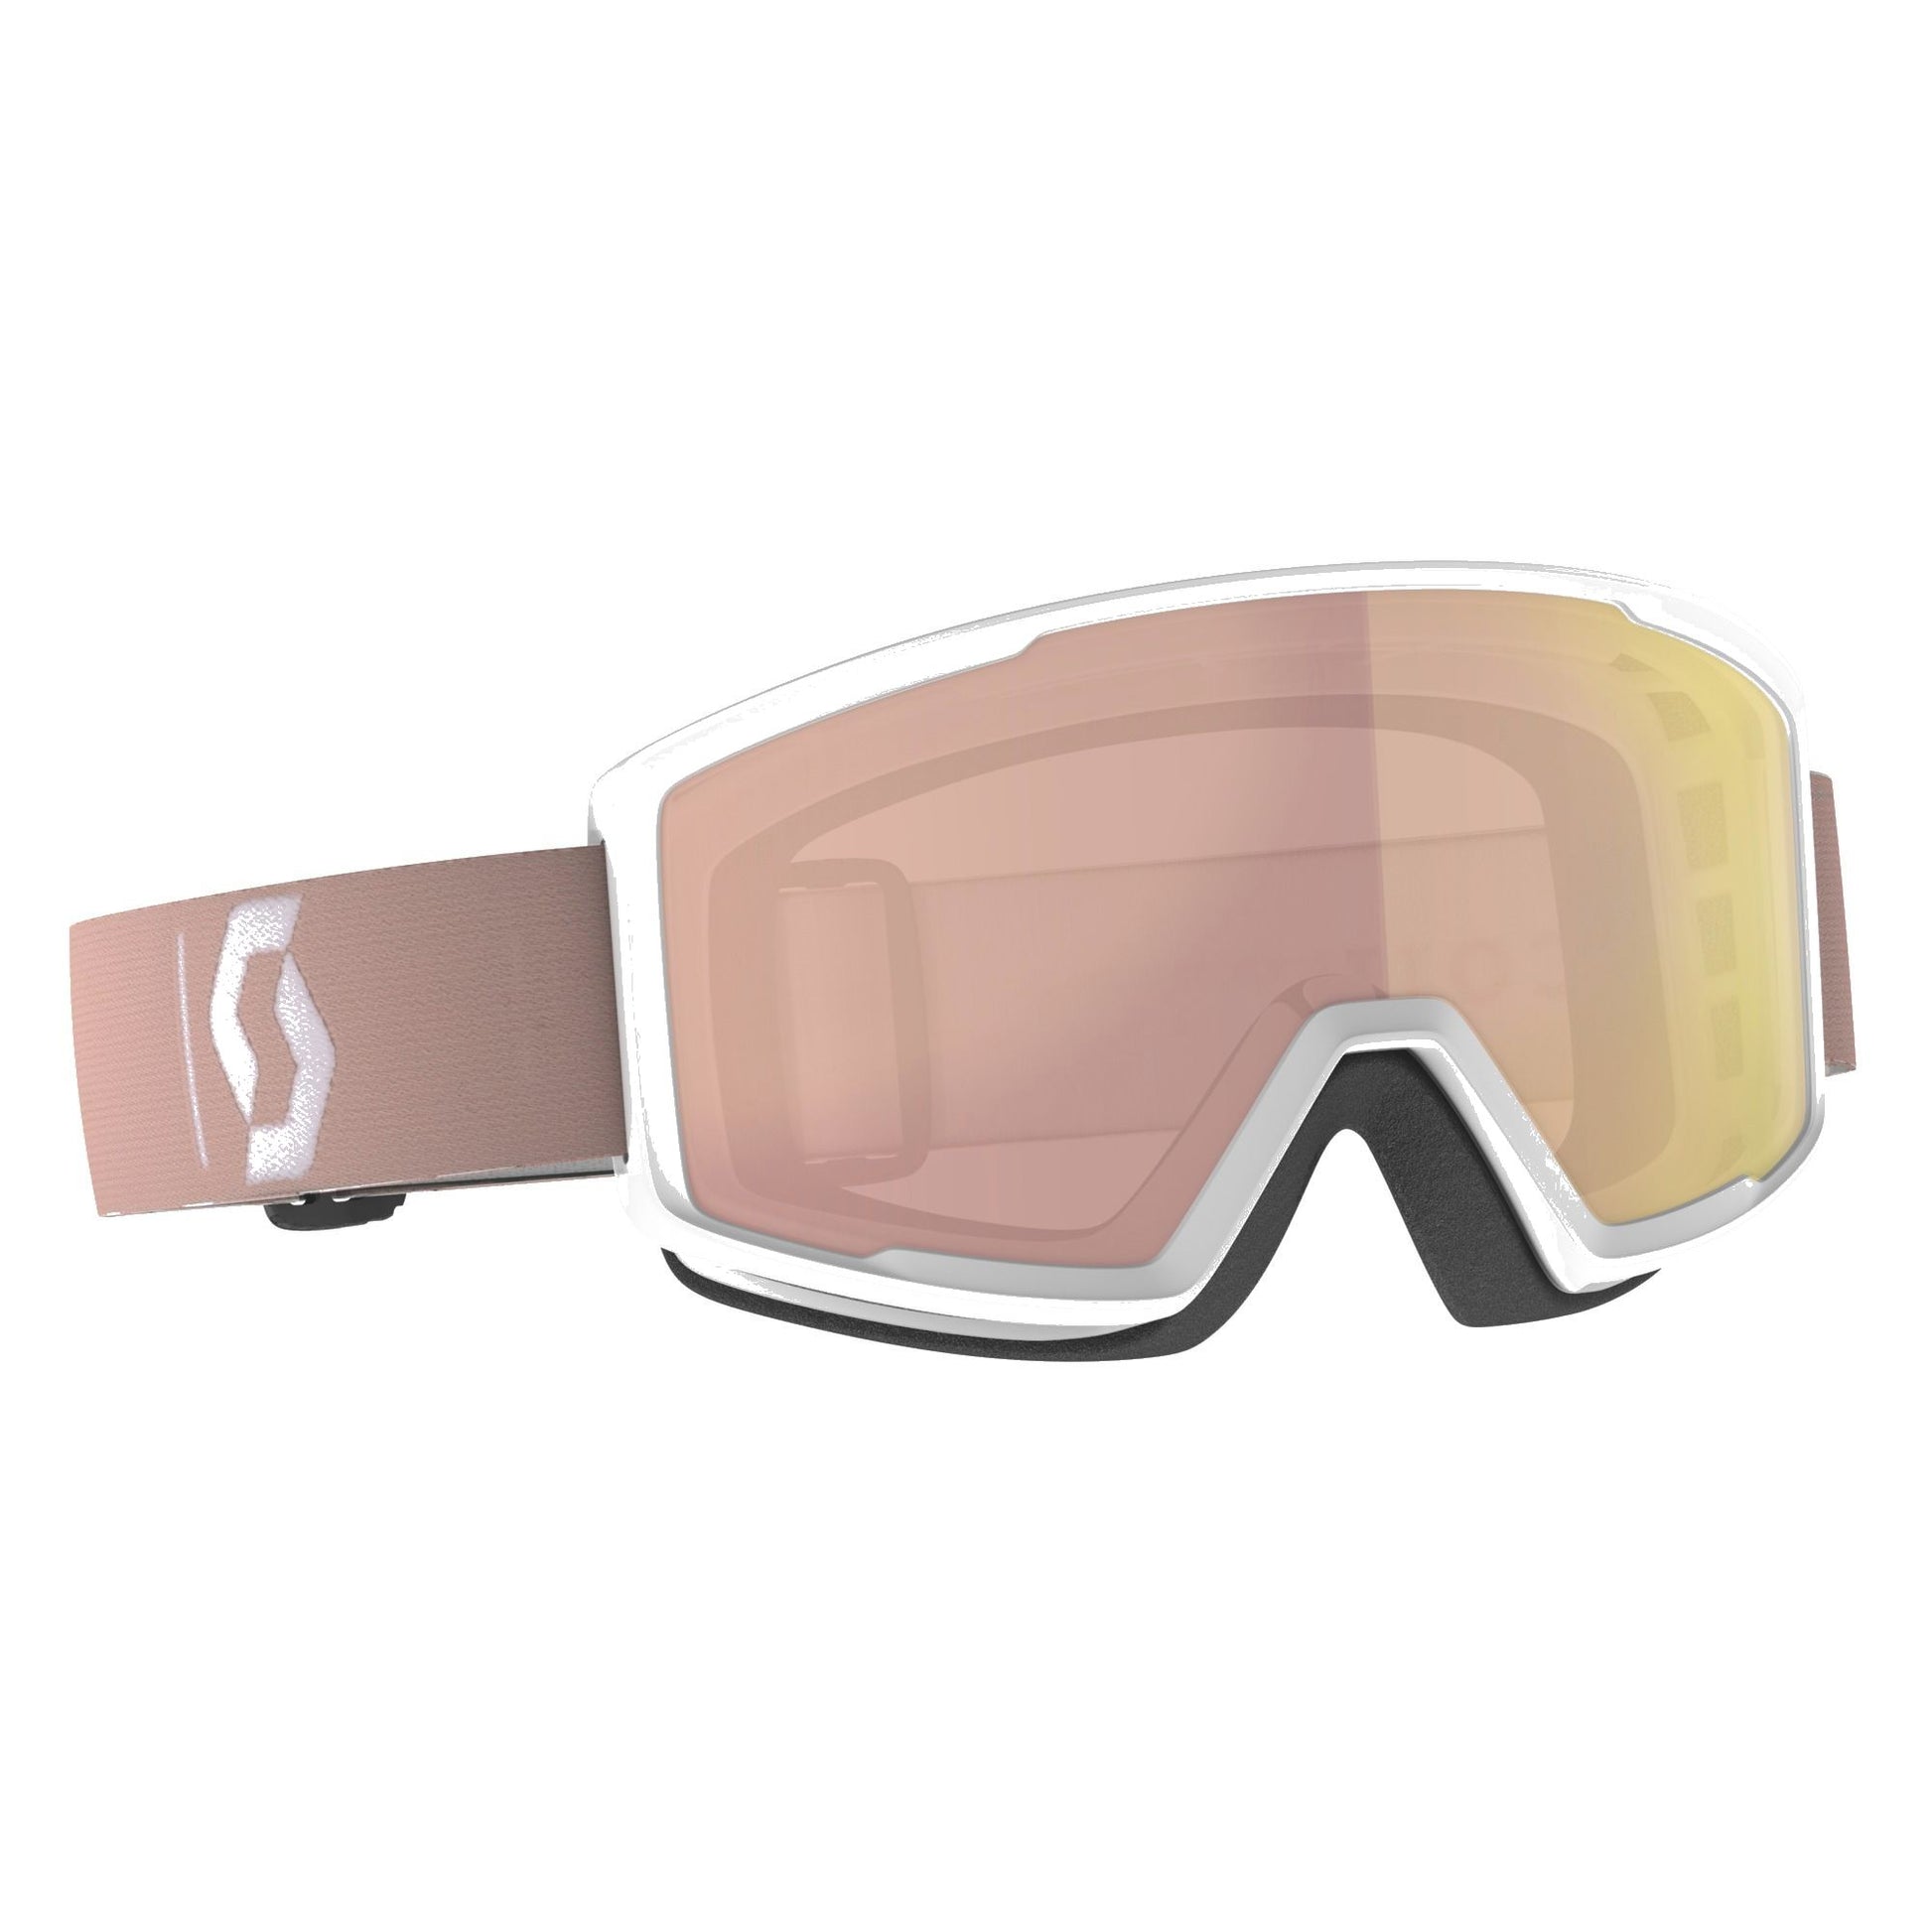 Scott Factor Pro Snow Goggle Pale Pink / Enhancer Rose Chrome Snow Goggles